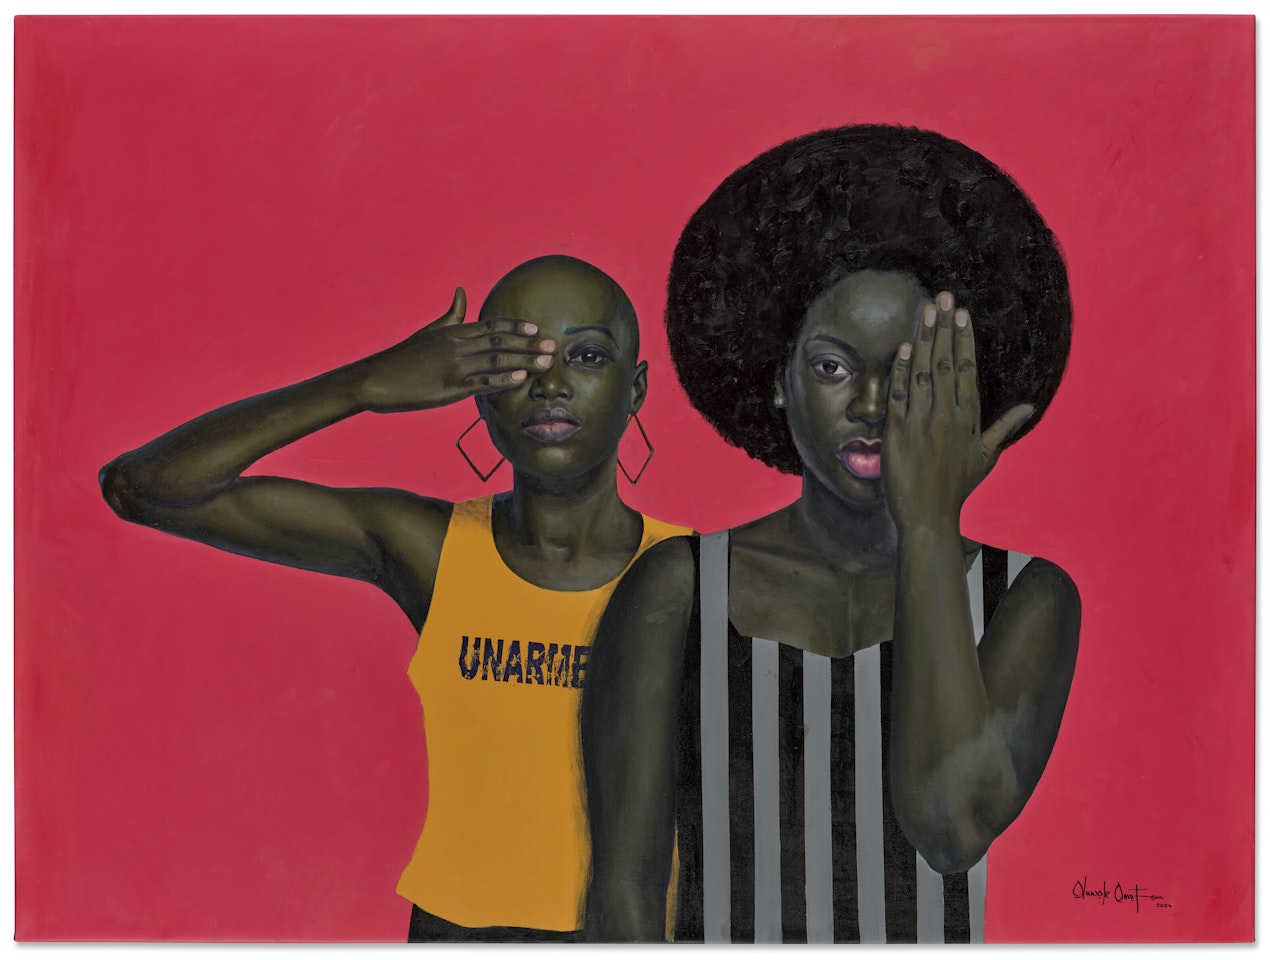 Unarmed by Oluwole Omofemi